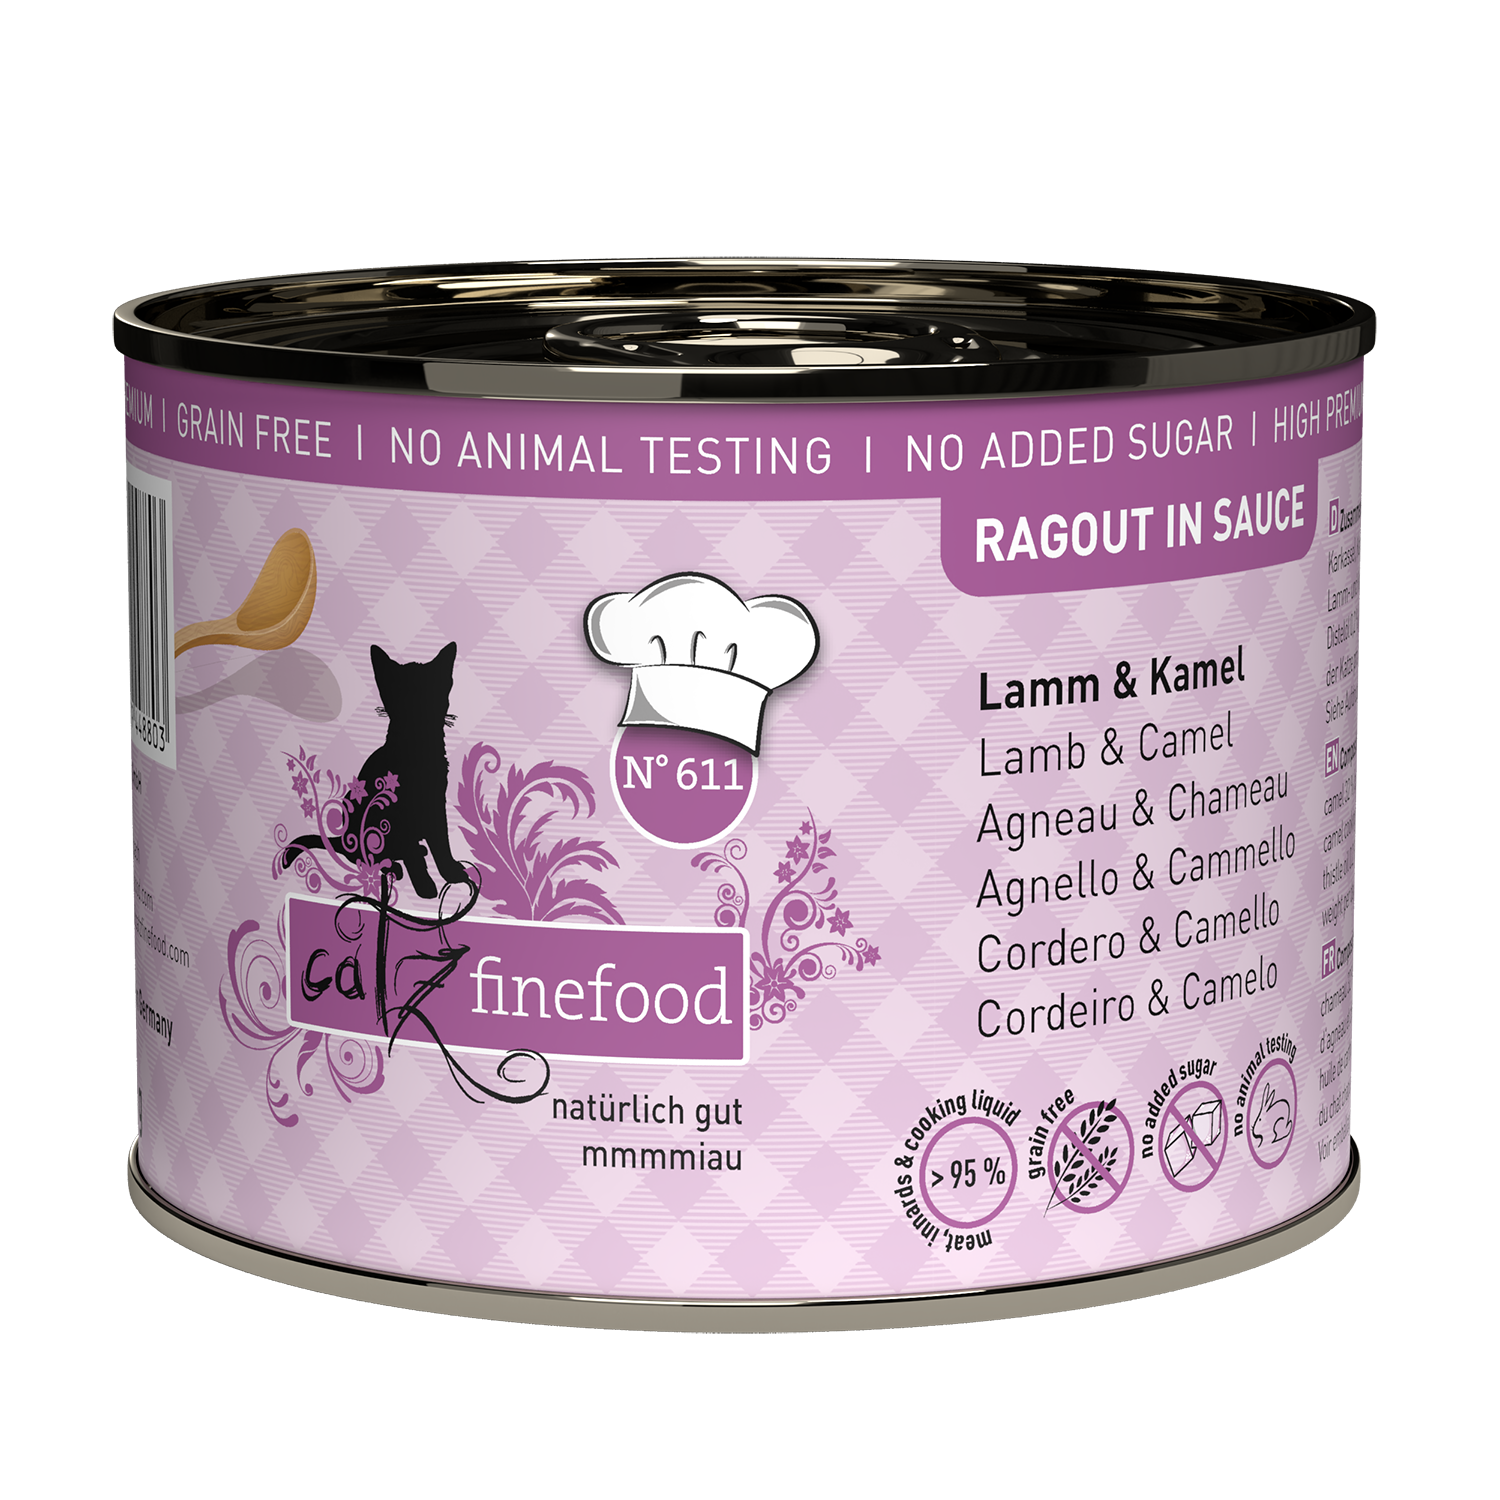 catz finefood RAGOUT IN SAUCE N° 611 Lamm & Kamel